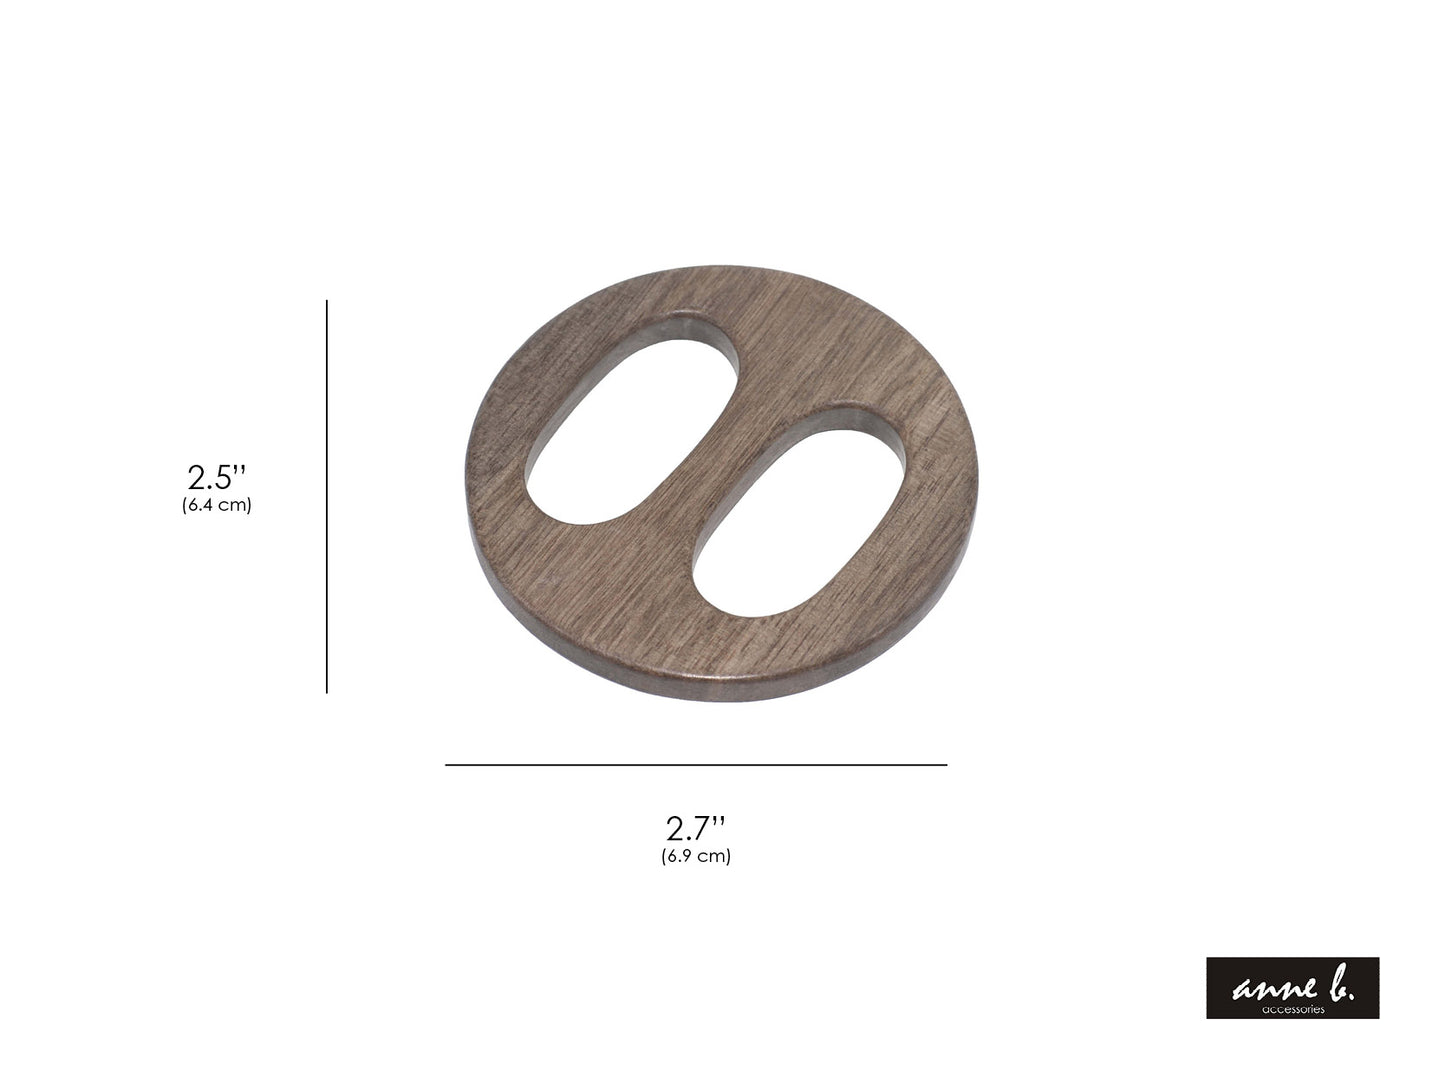 Grey Wood Scarf Ring - Round